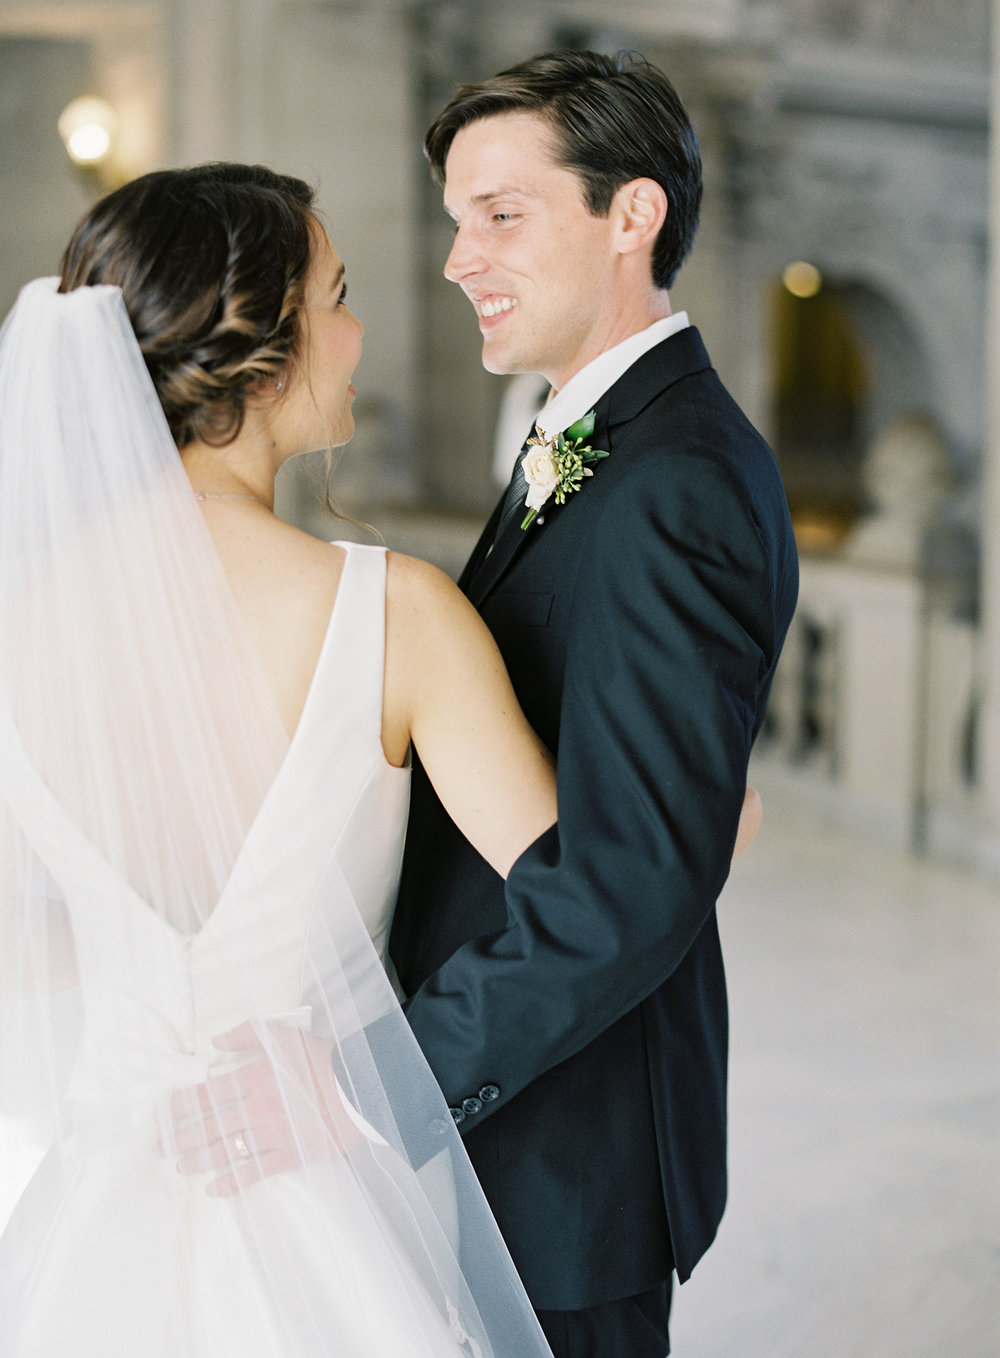 Meghan Mehan Photography - California Wedding Photographer | San Francisco City Hall Wedding 019.jpg